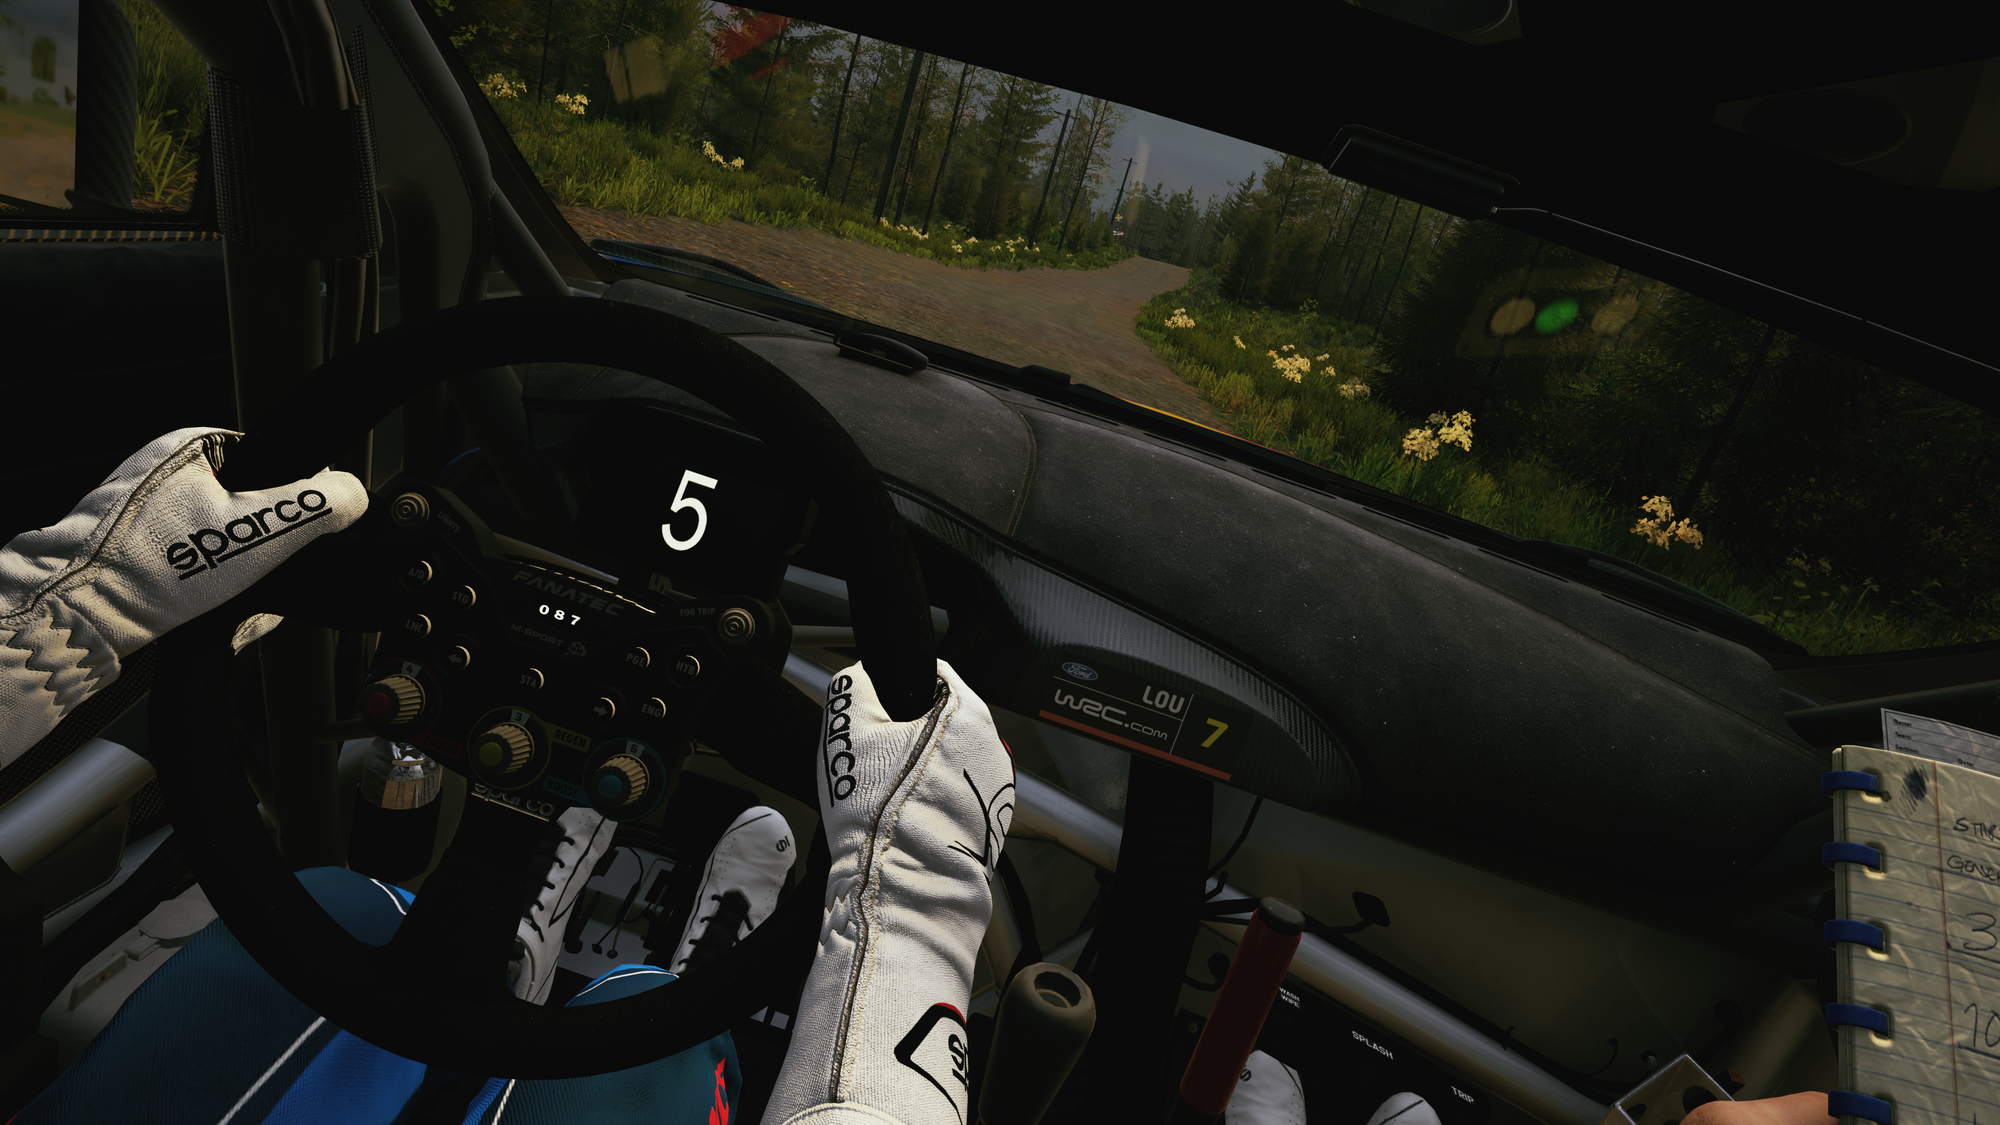 EA Sports WRC Hands-On: Enjoyable Racing But VR Beta Needs Fine Tuning